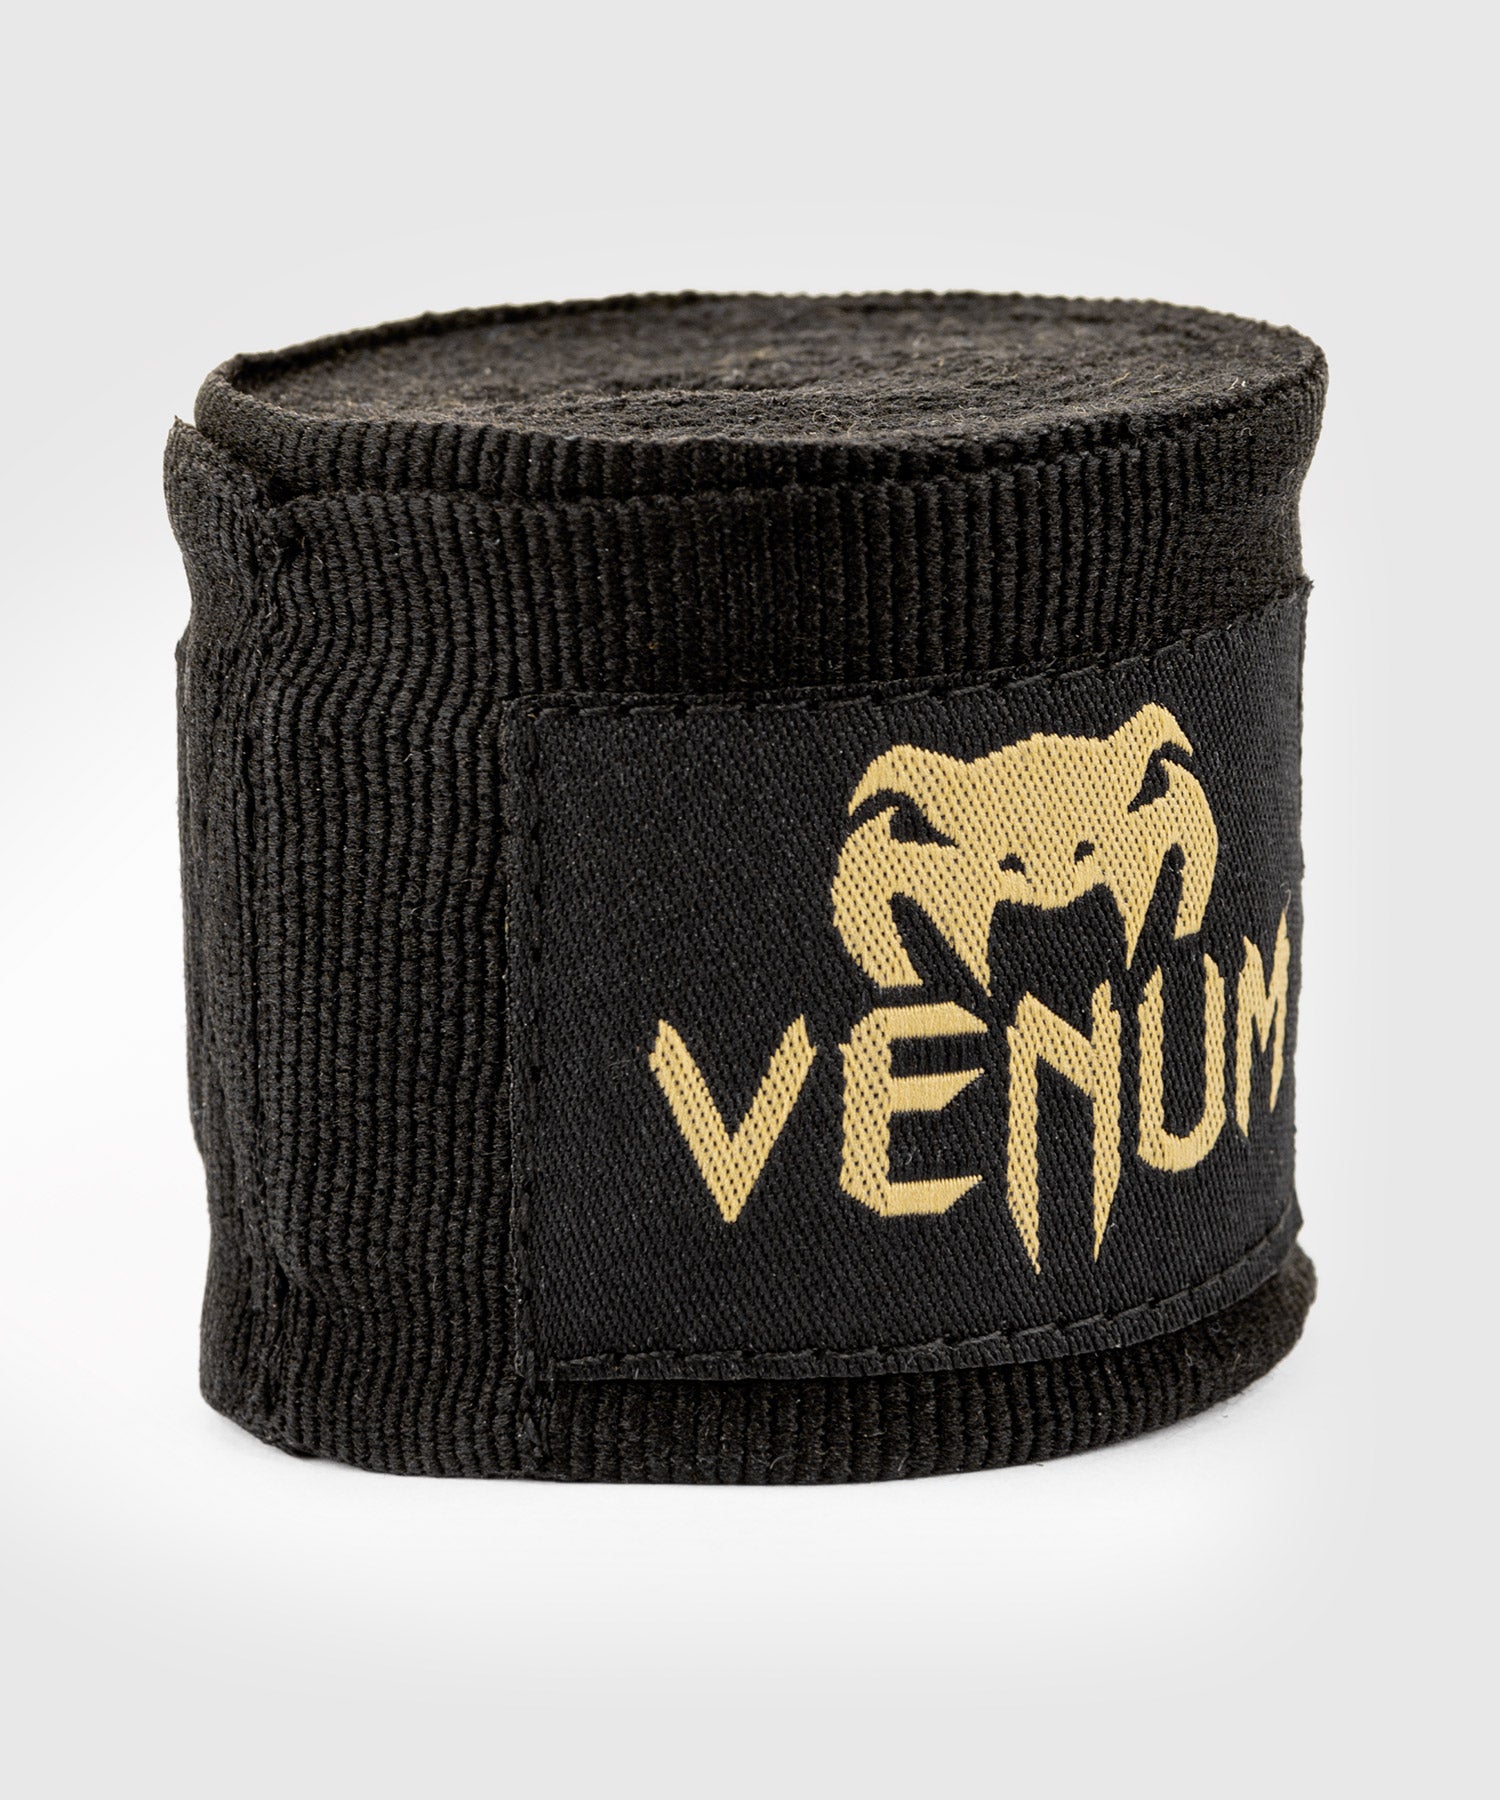 Bandage de boxe Venum Kontact - lecoinduring